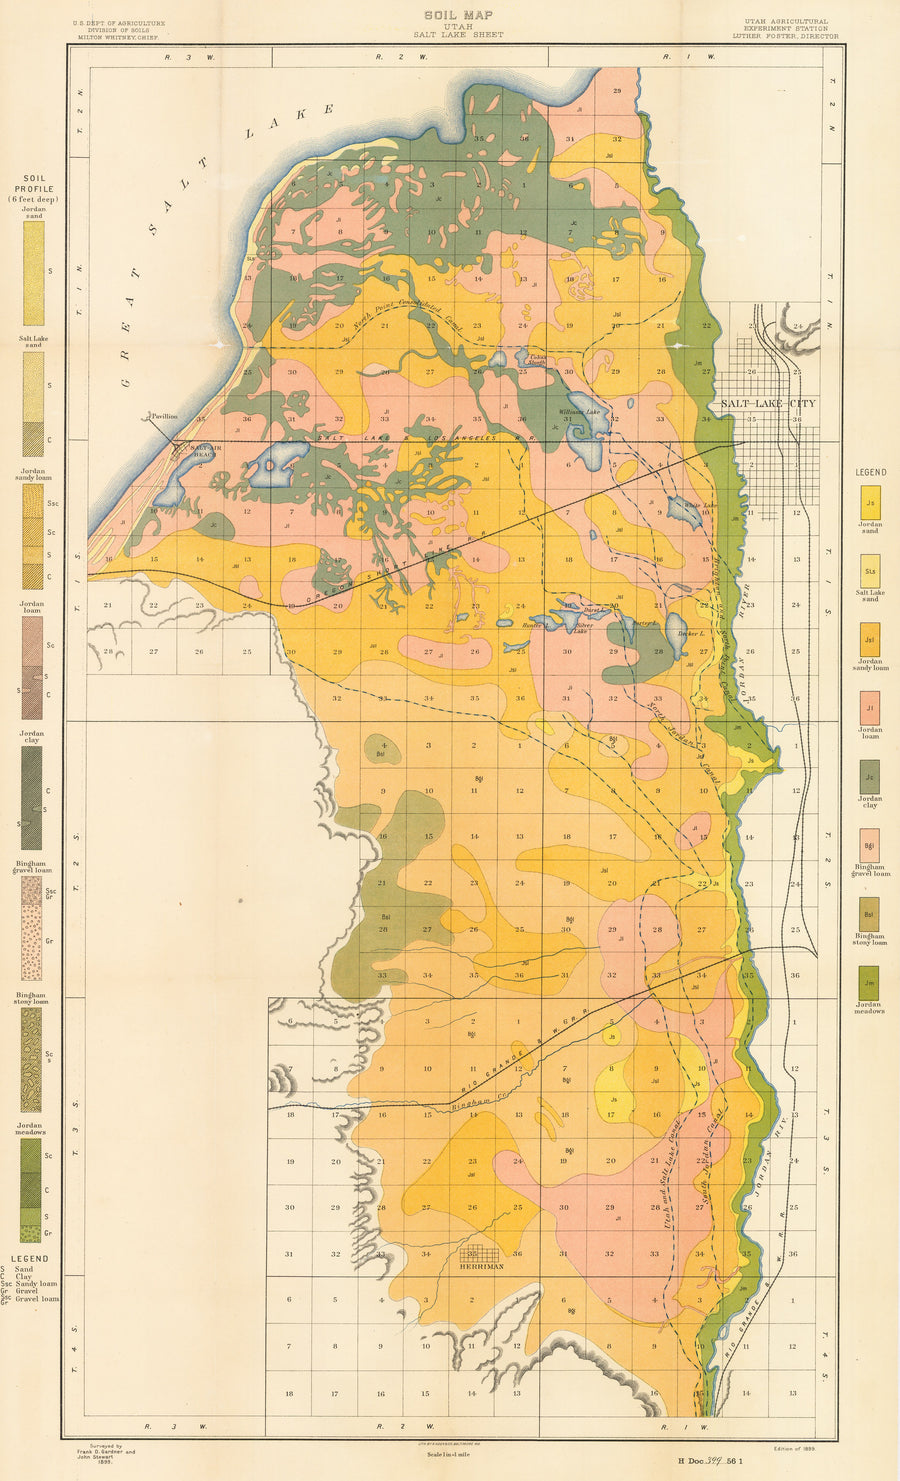 Soil Map Utah Salt Lake Region by: Whitney and Foster, 1899